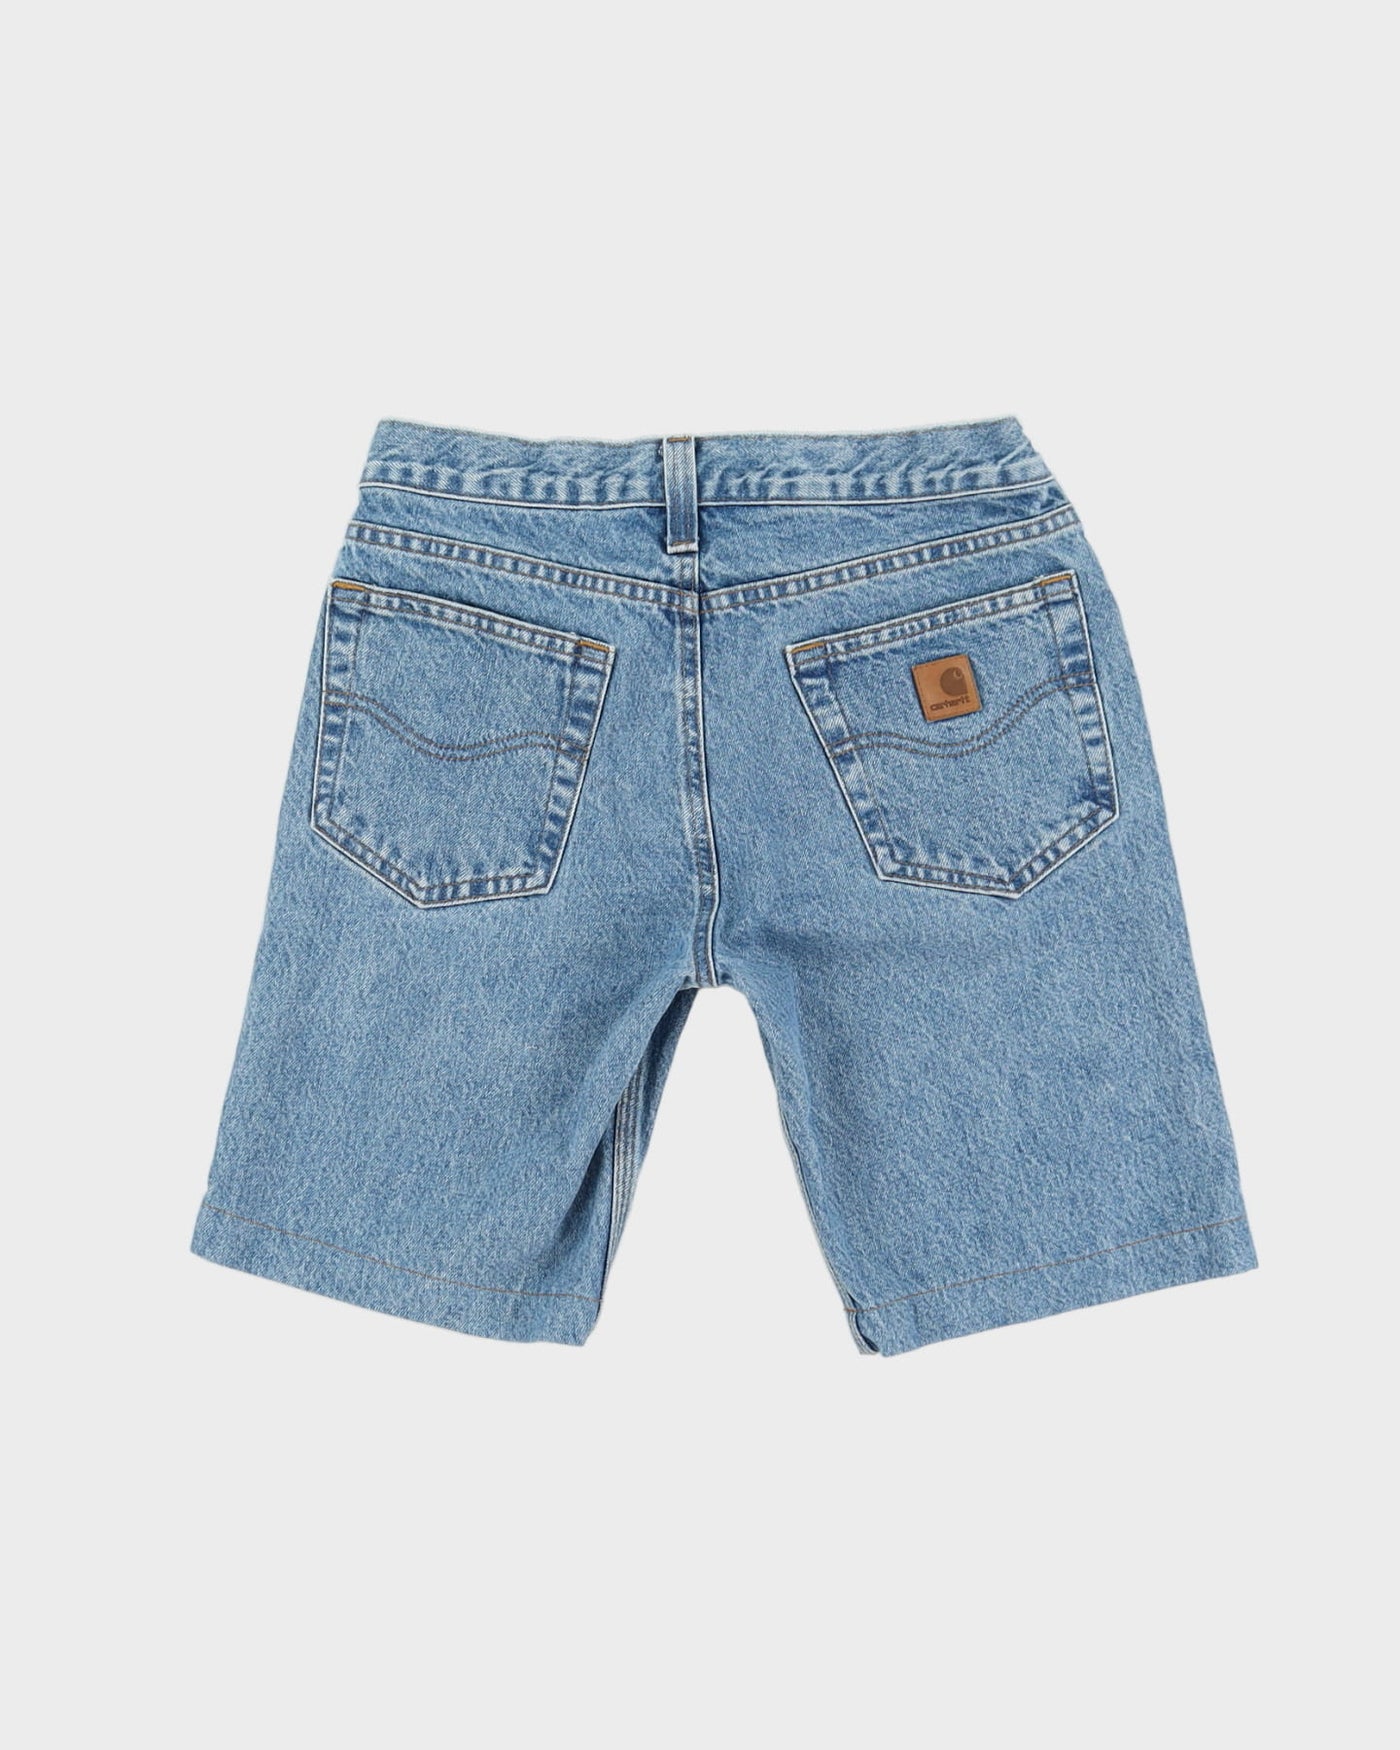 90s Carhartt Blue Denim Workwear Shorts - W30